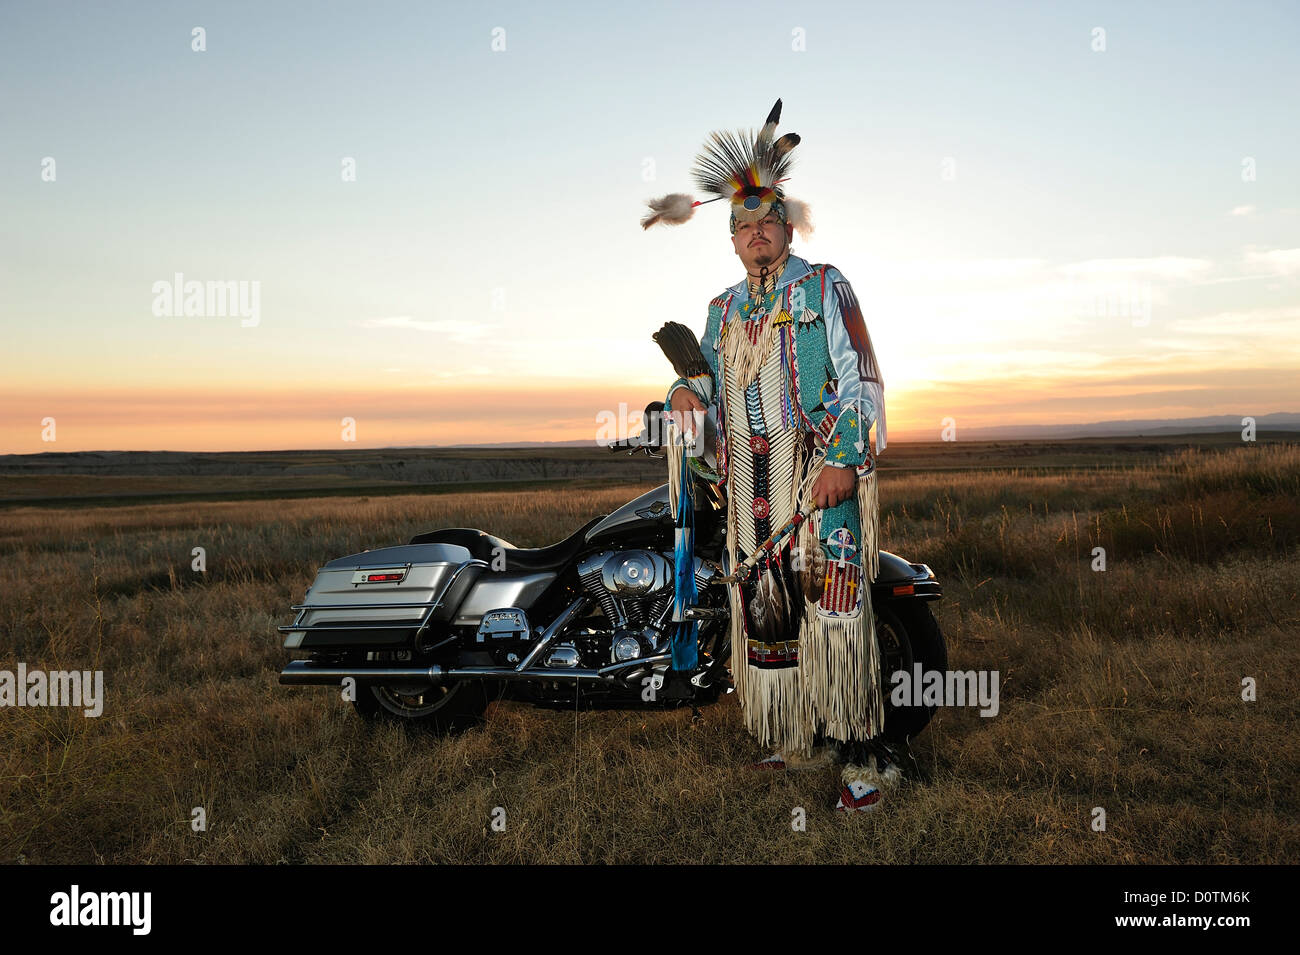 Sioux, Badlands, Stephen Yellowhawk, Fahrrad, Badland, Krieger, Federn, Insignien, American Native, Lakota, South Dakota, USA, Uni Stockfoto